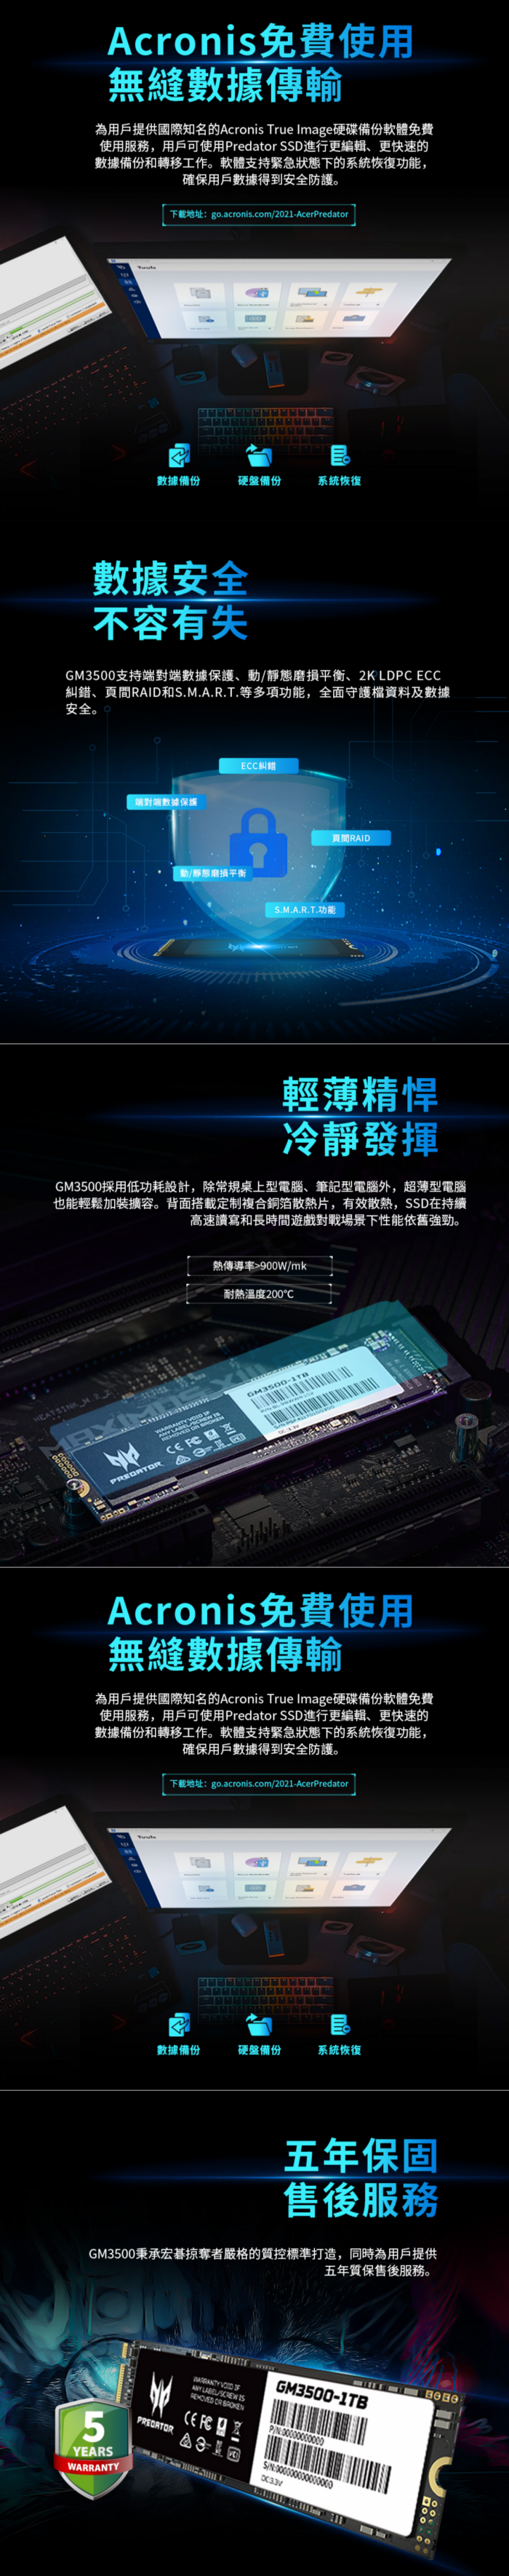 Acer Predator GM3500 1TB M.2 2280 PCIe Gen3x4